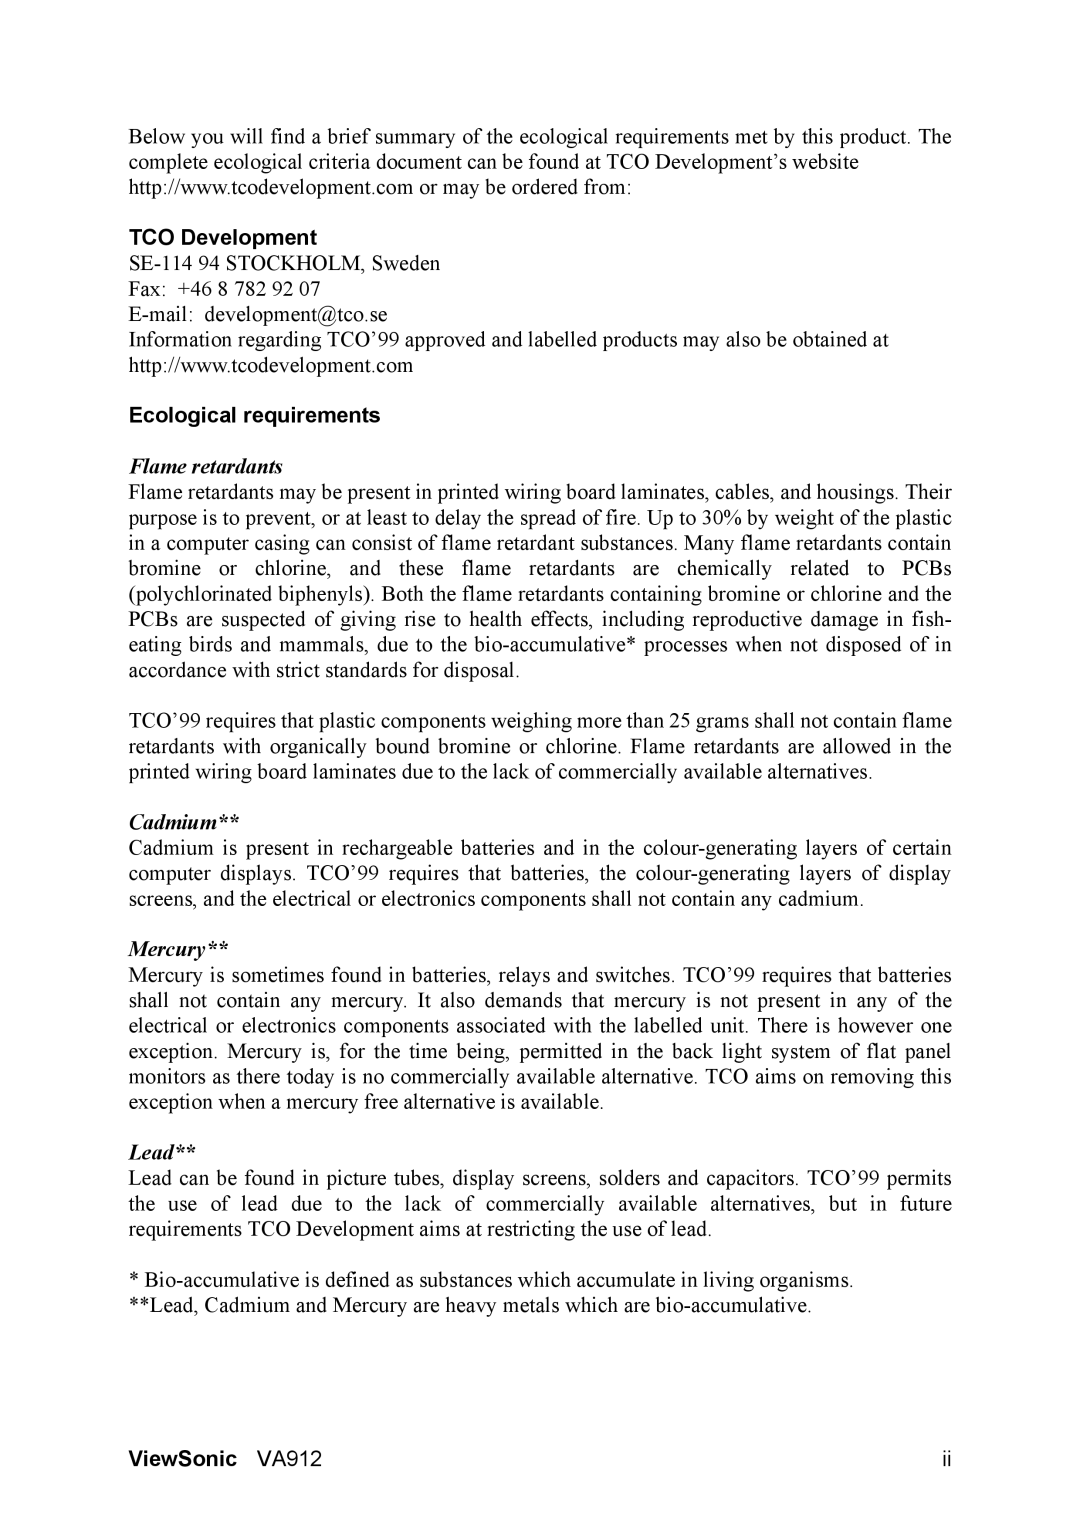 ViewSonic VA912 manual TCO Development, Ecological requirements 